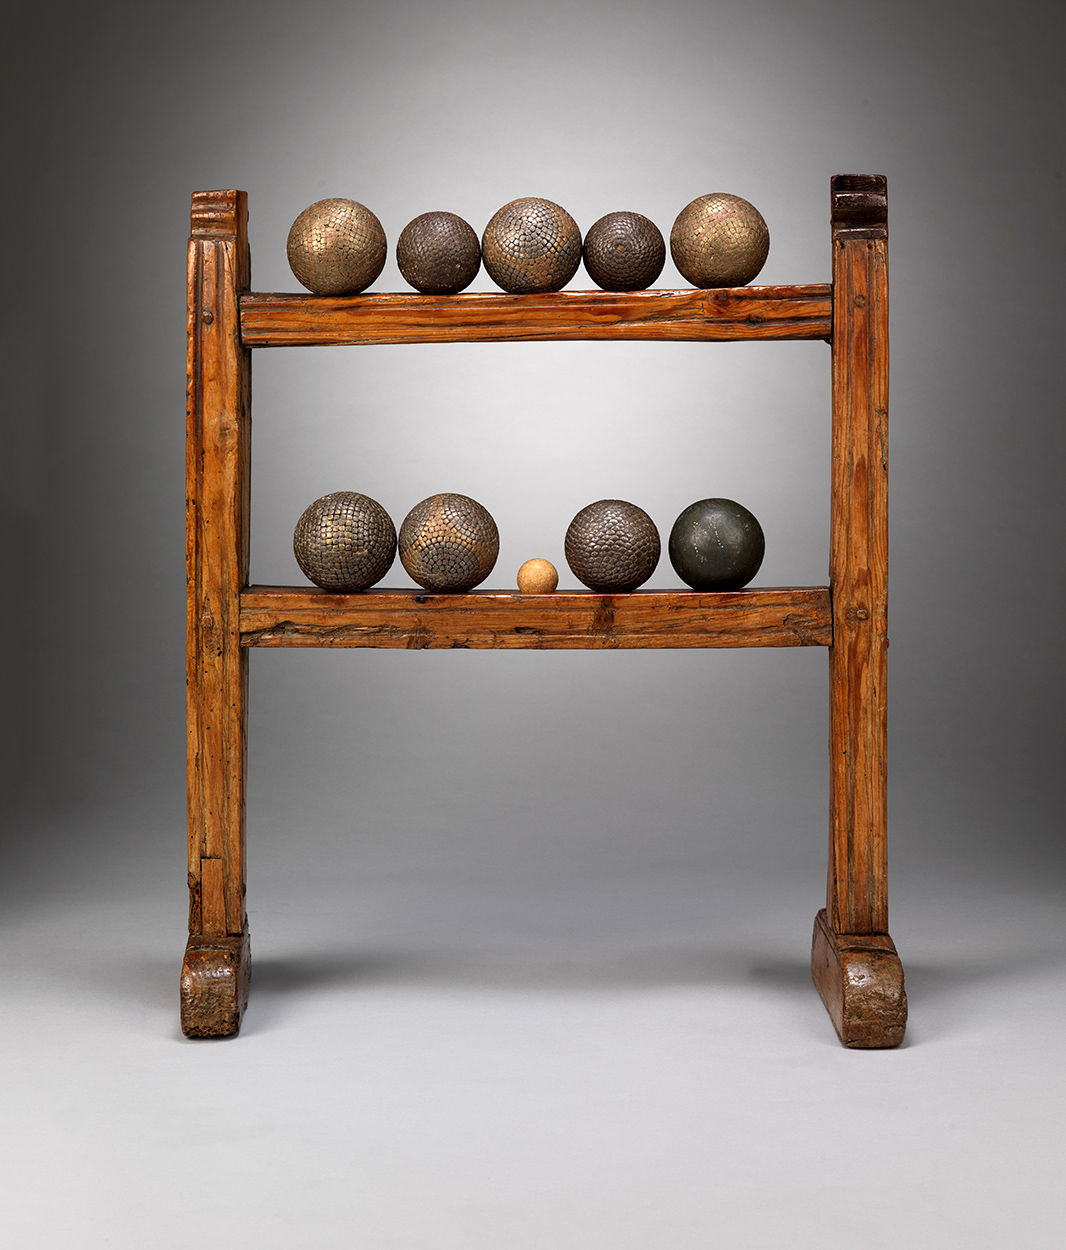 Rare Collection of Boules or "Petanque" Balls